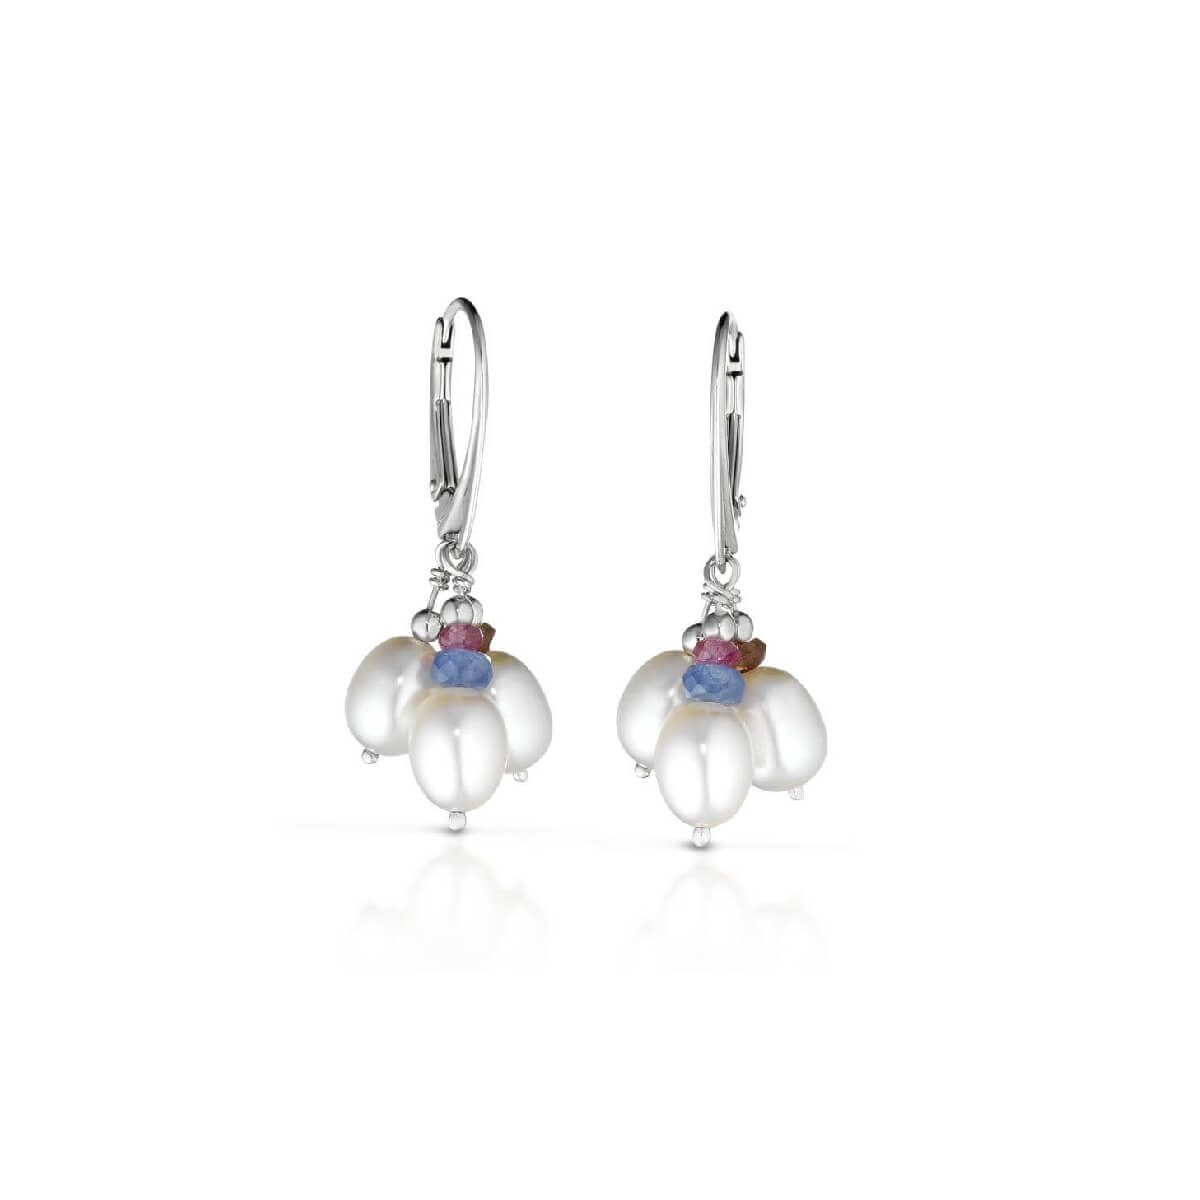 Three fresh water pearl  and tourmaline earrings